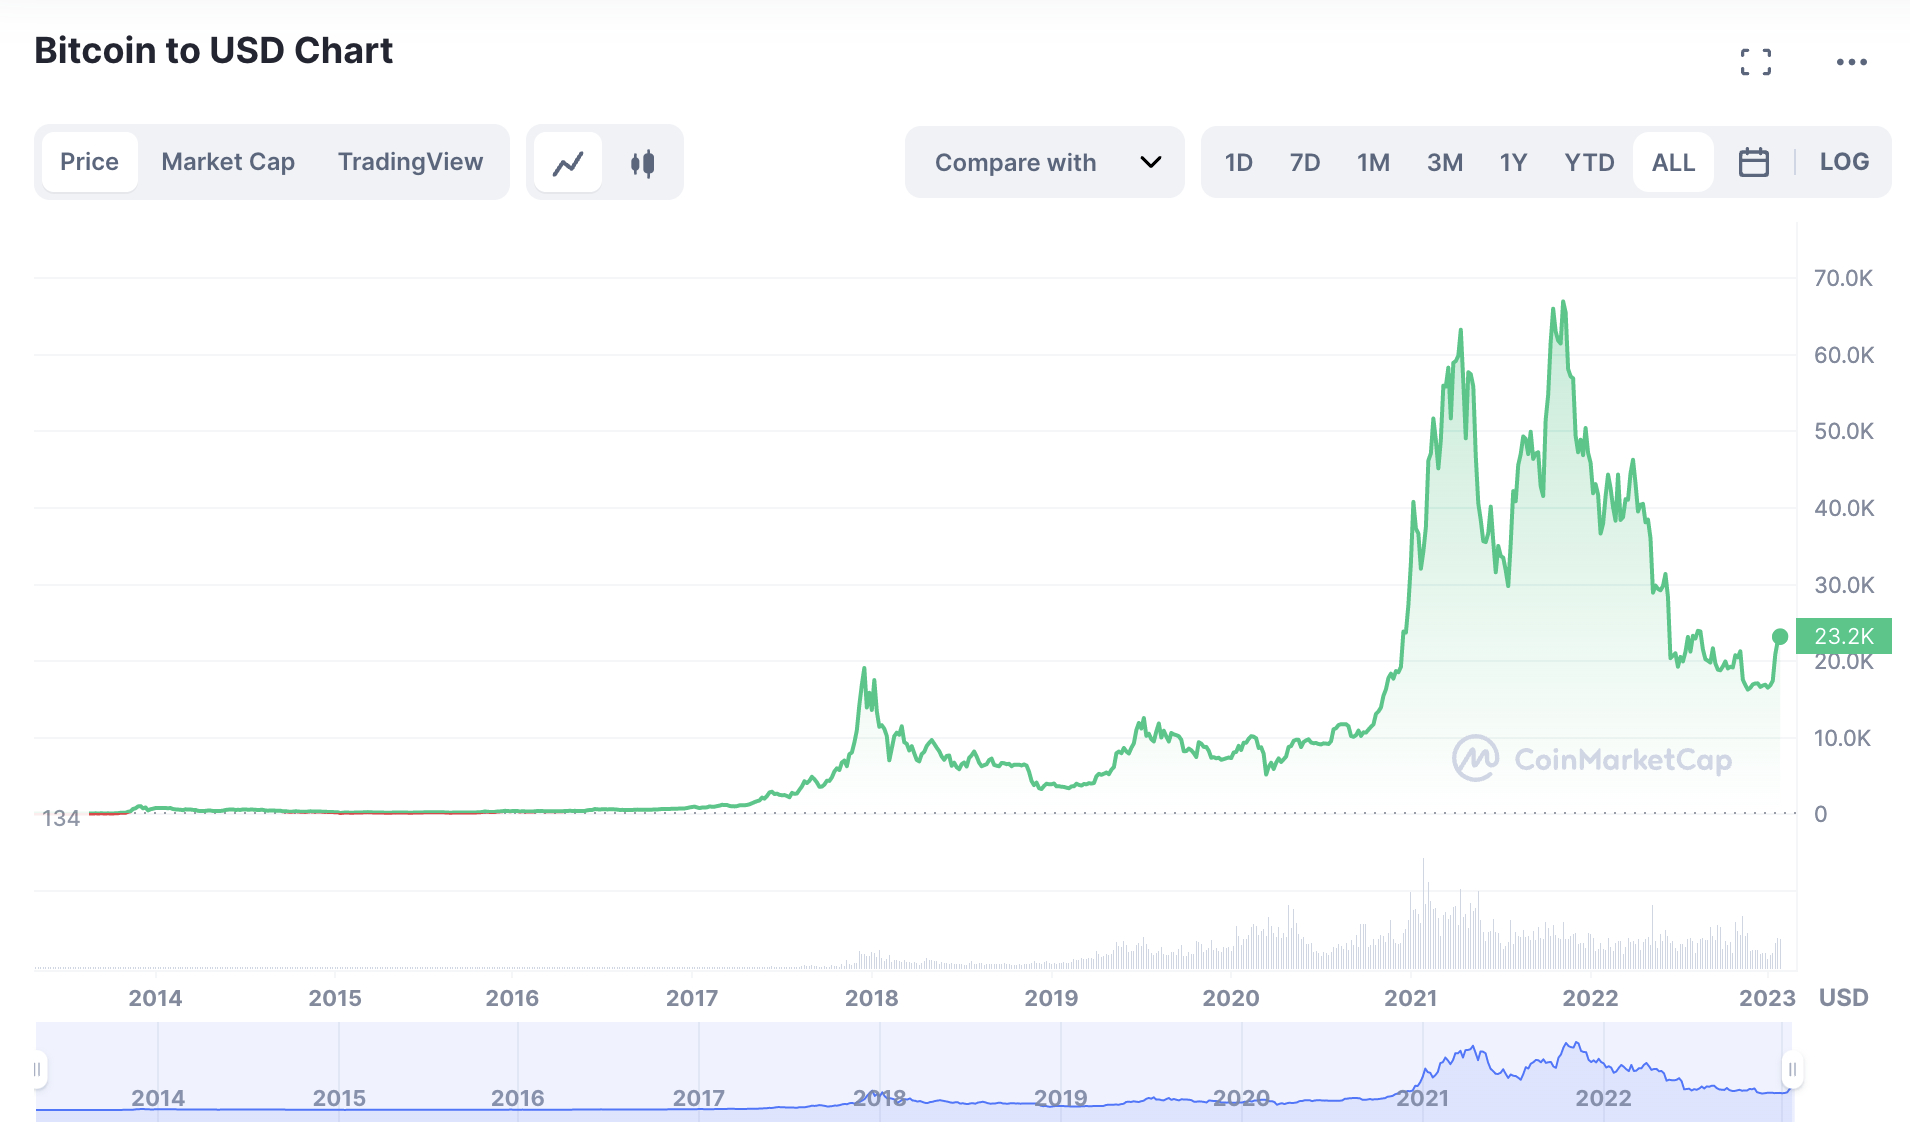 Bitcoin To USD Price Chart